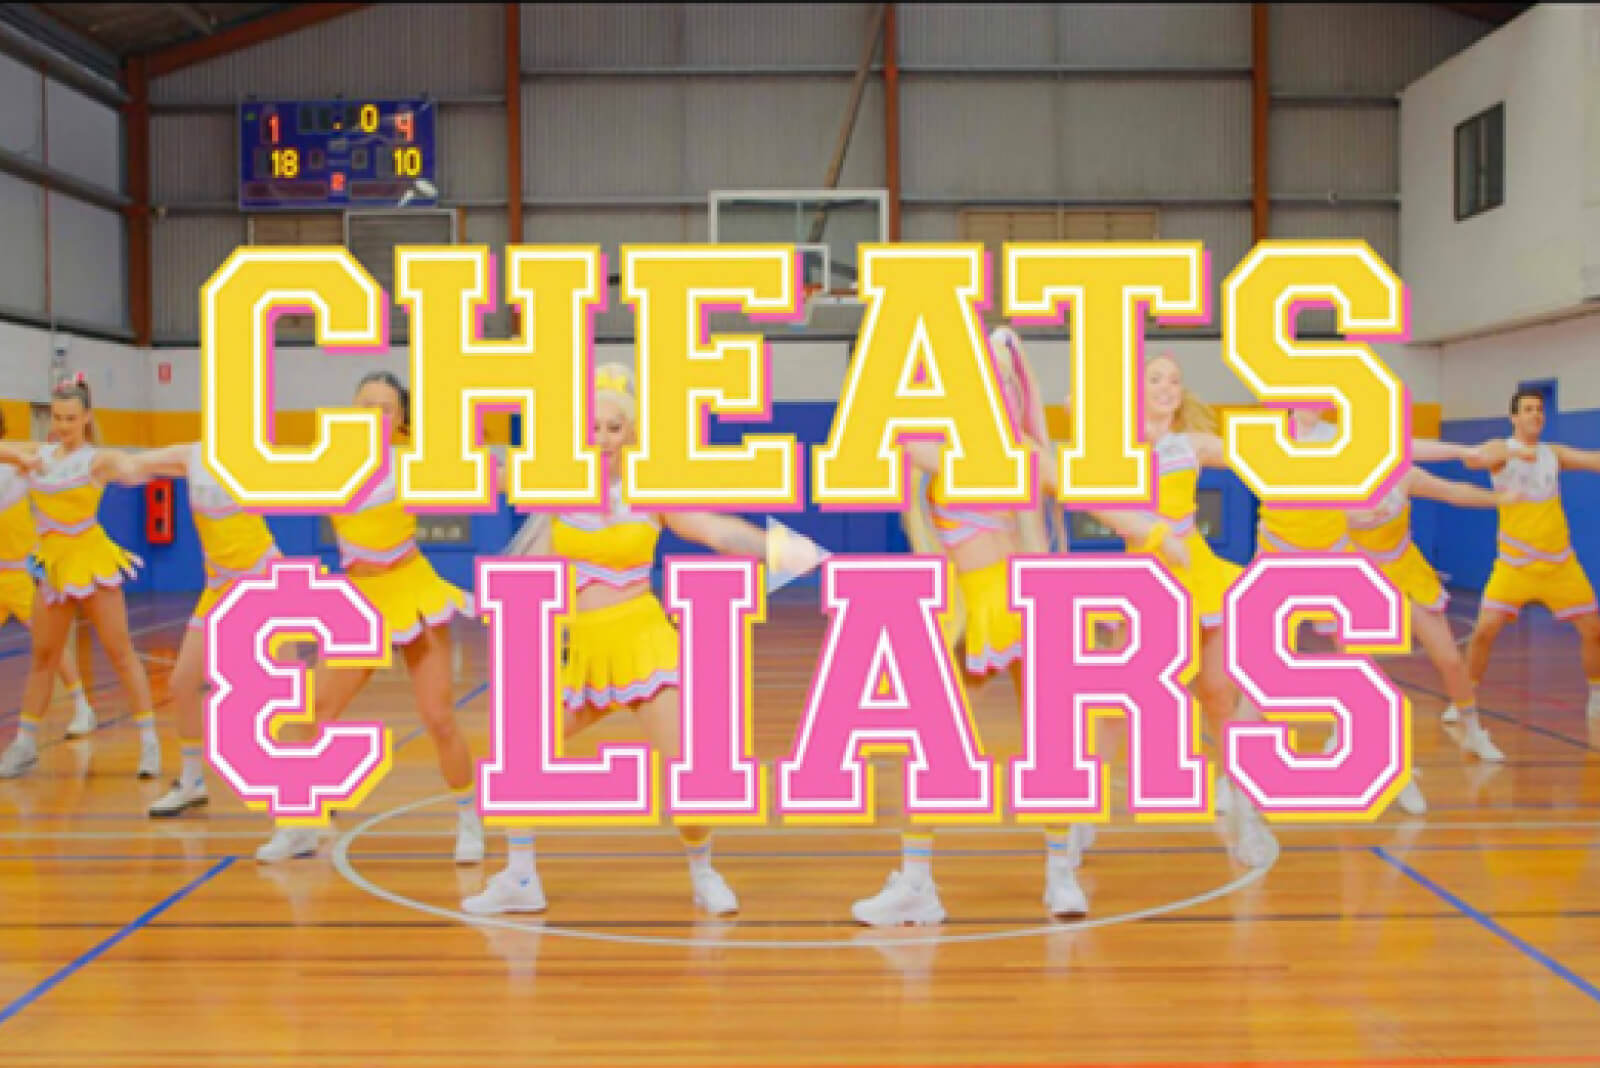 Cheats & Liars